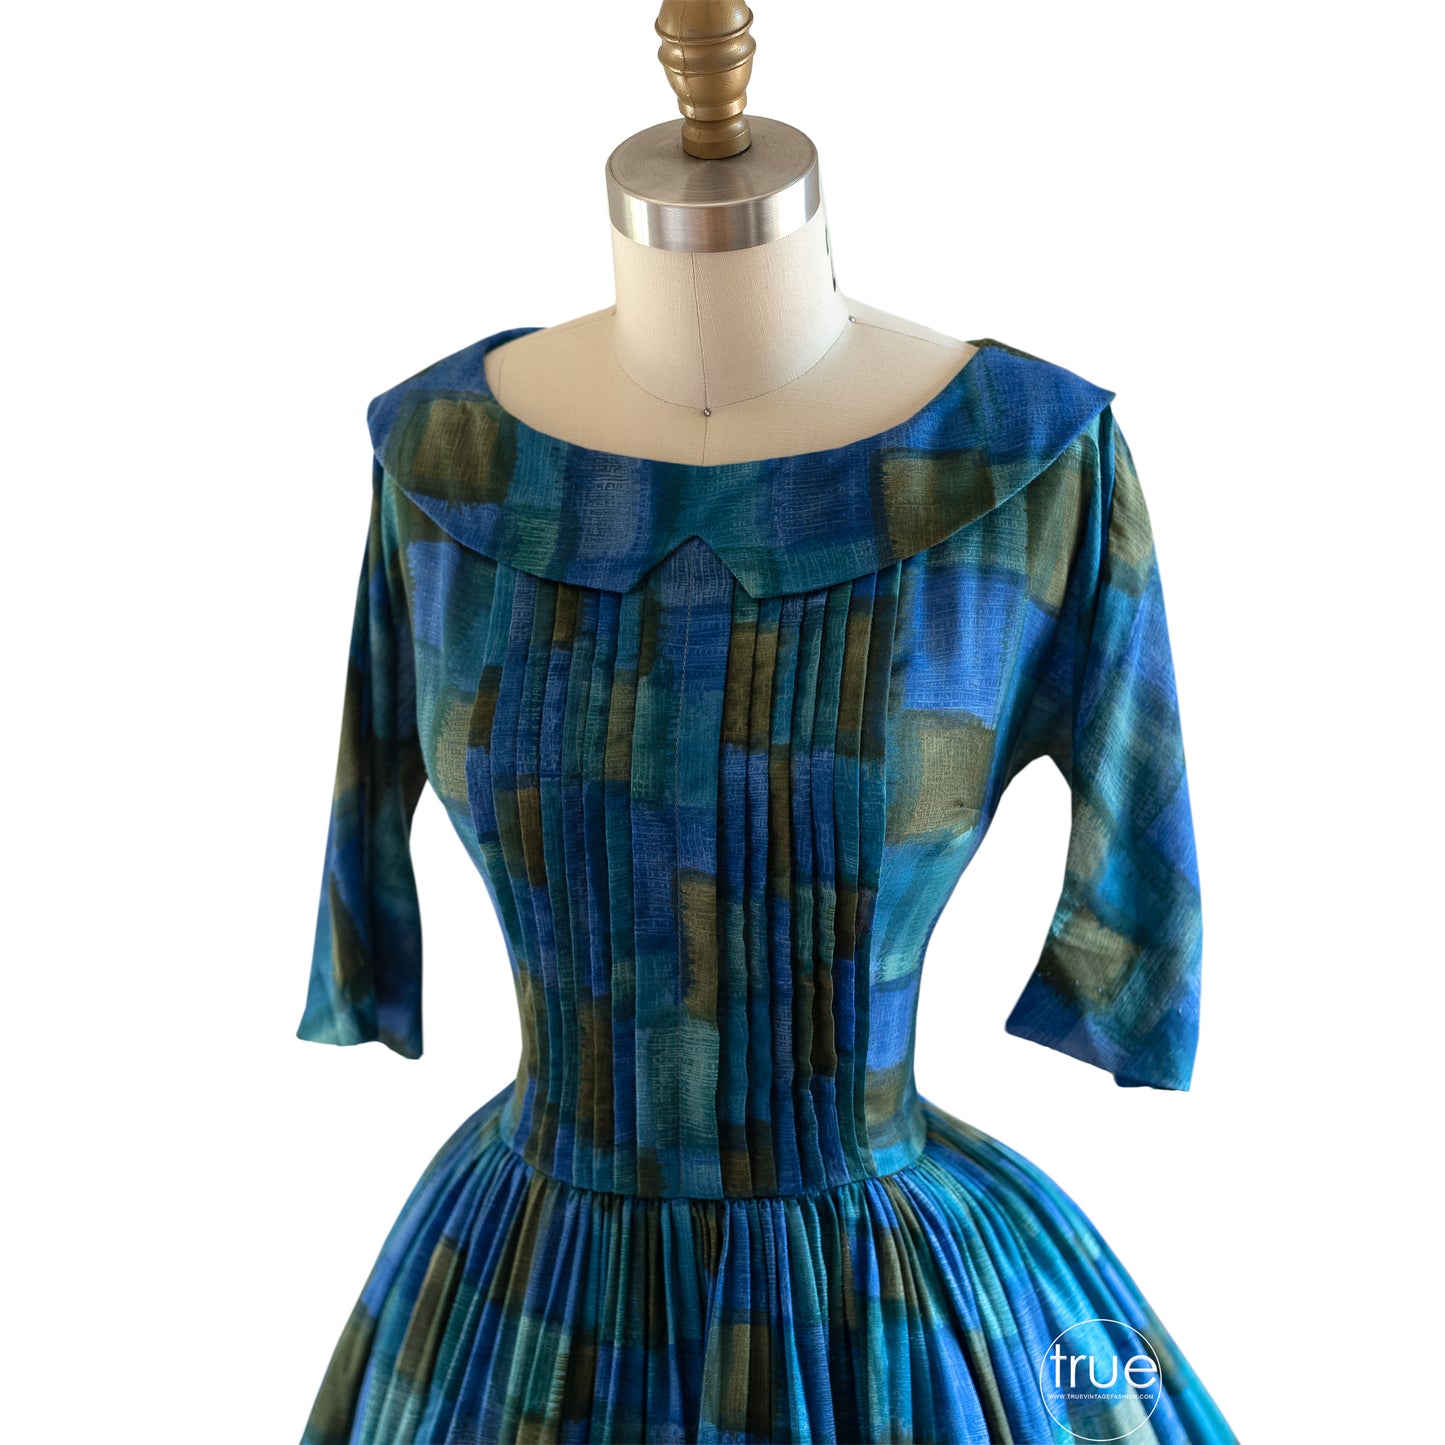 vintage 1950's dress R&K Originals blue rothko-esque dress